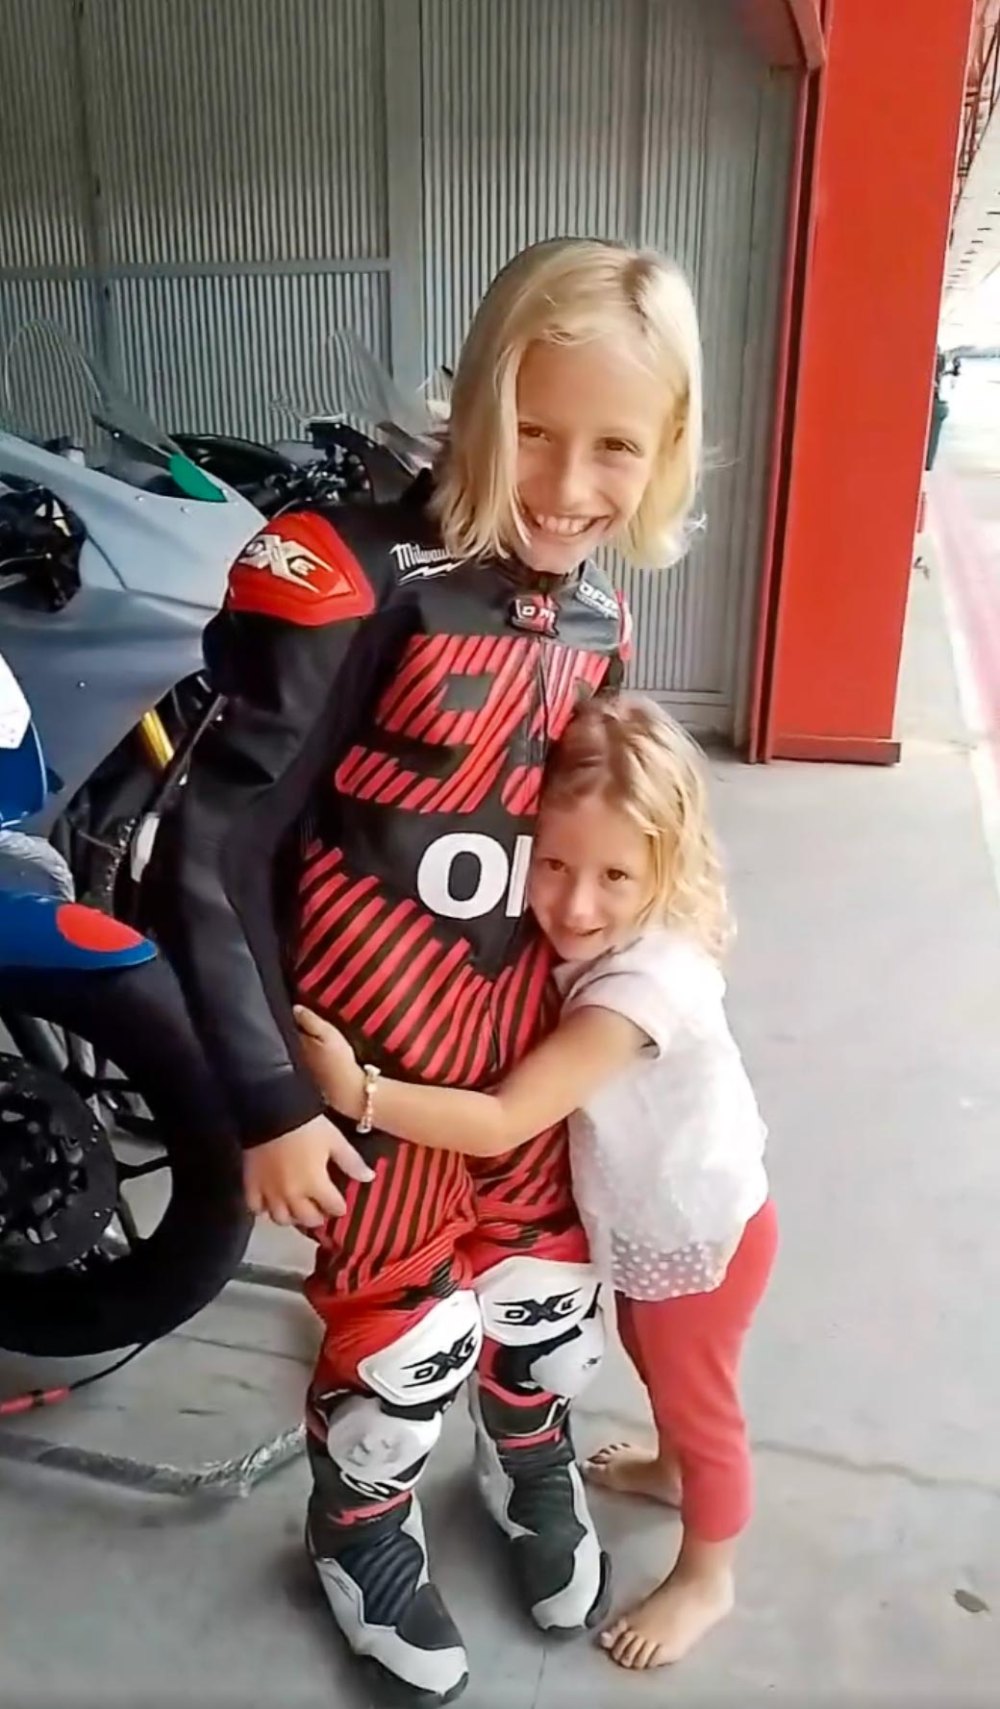 9 Year Old Motorbike Racer Lorenzo Somaschini Dies During Crash at Honda Junior Cup Practice 641